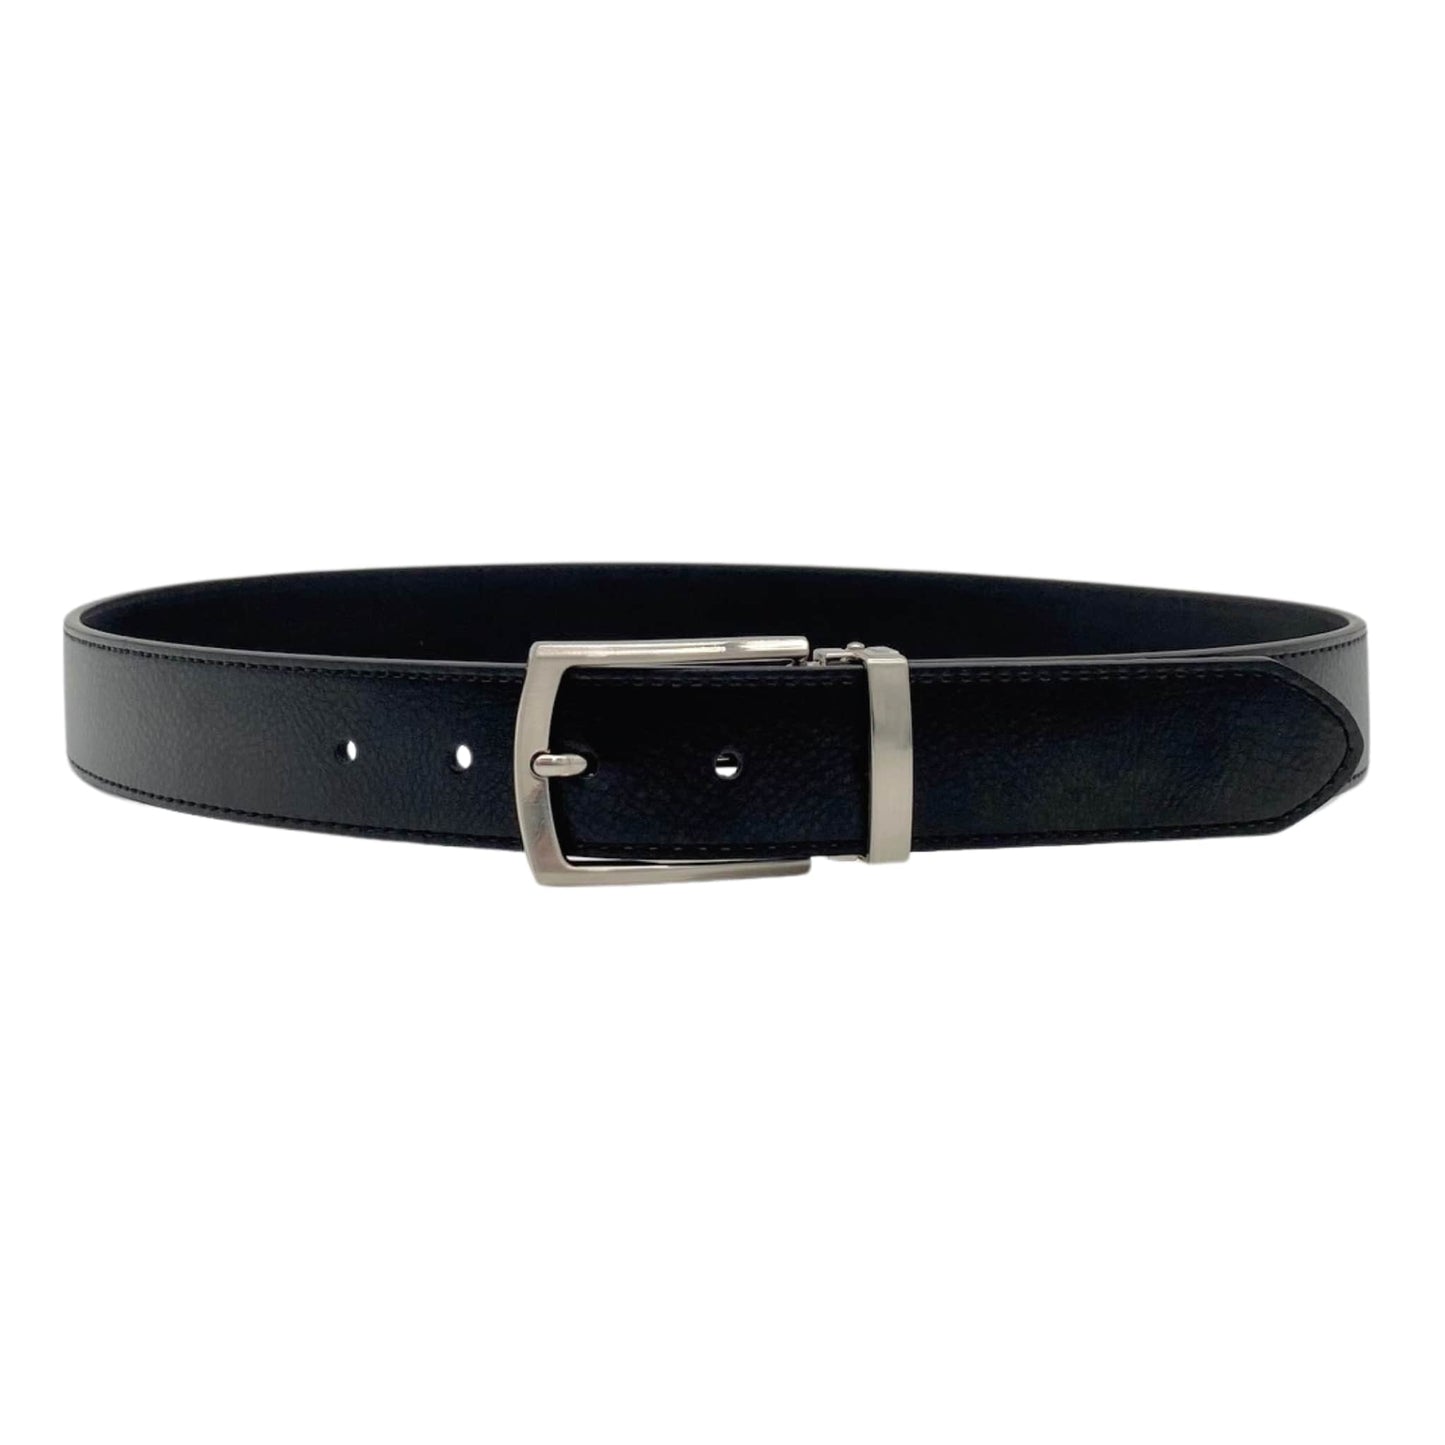 Ace - Men's Black Genuine Leather Belt – The Fitting Belt Company